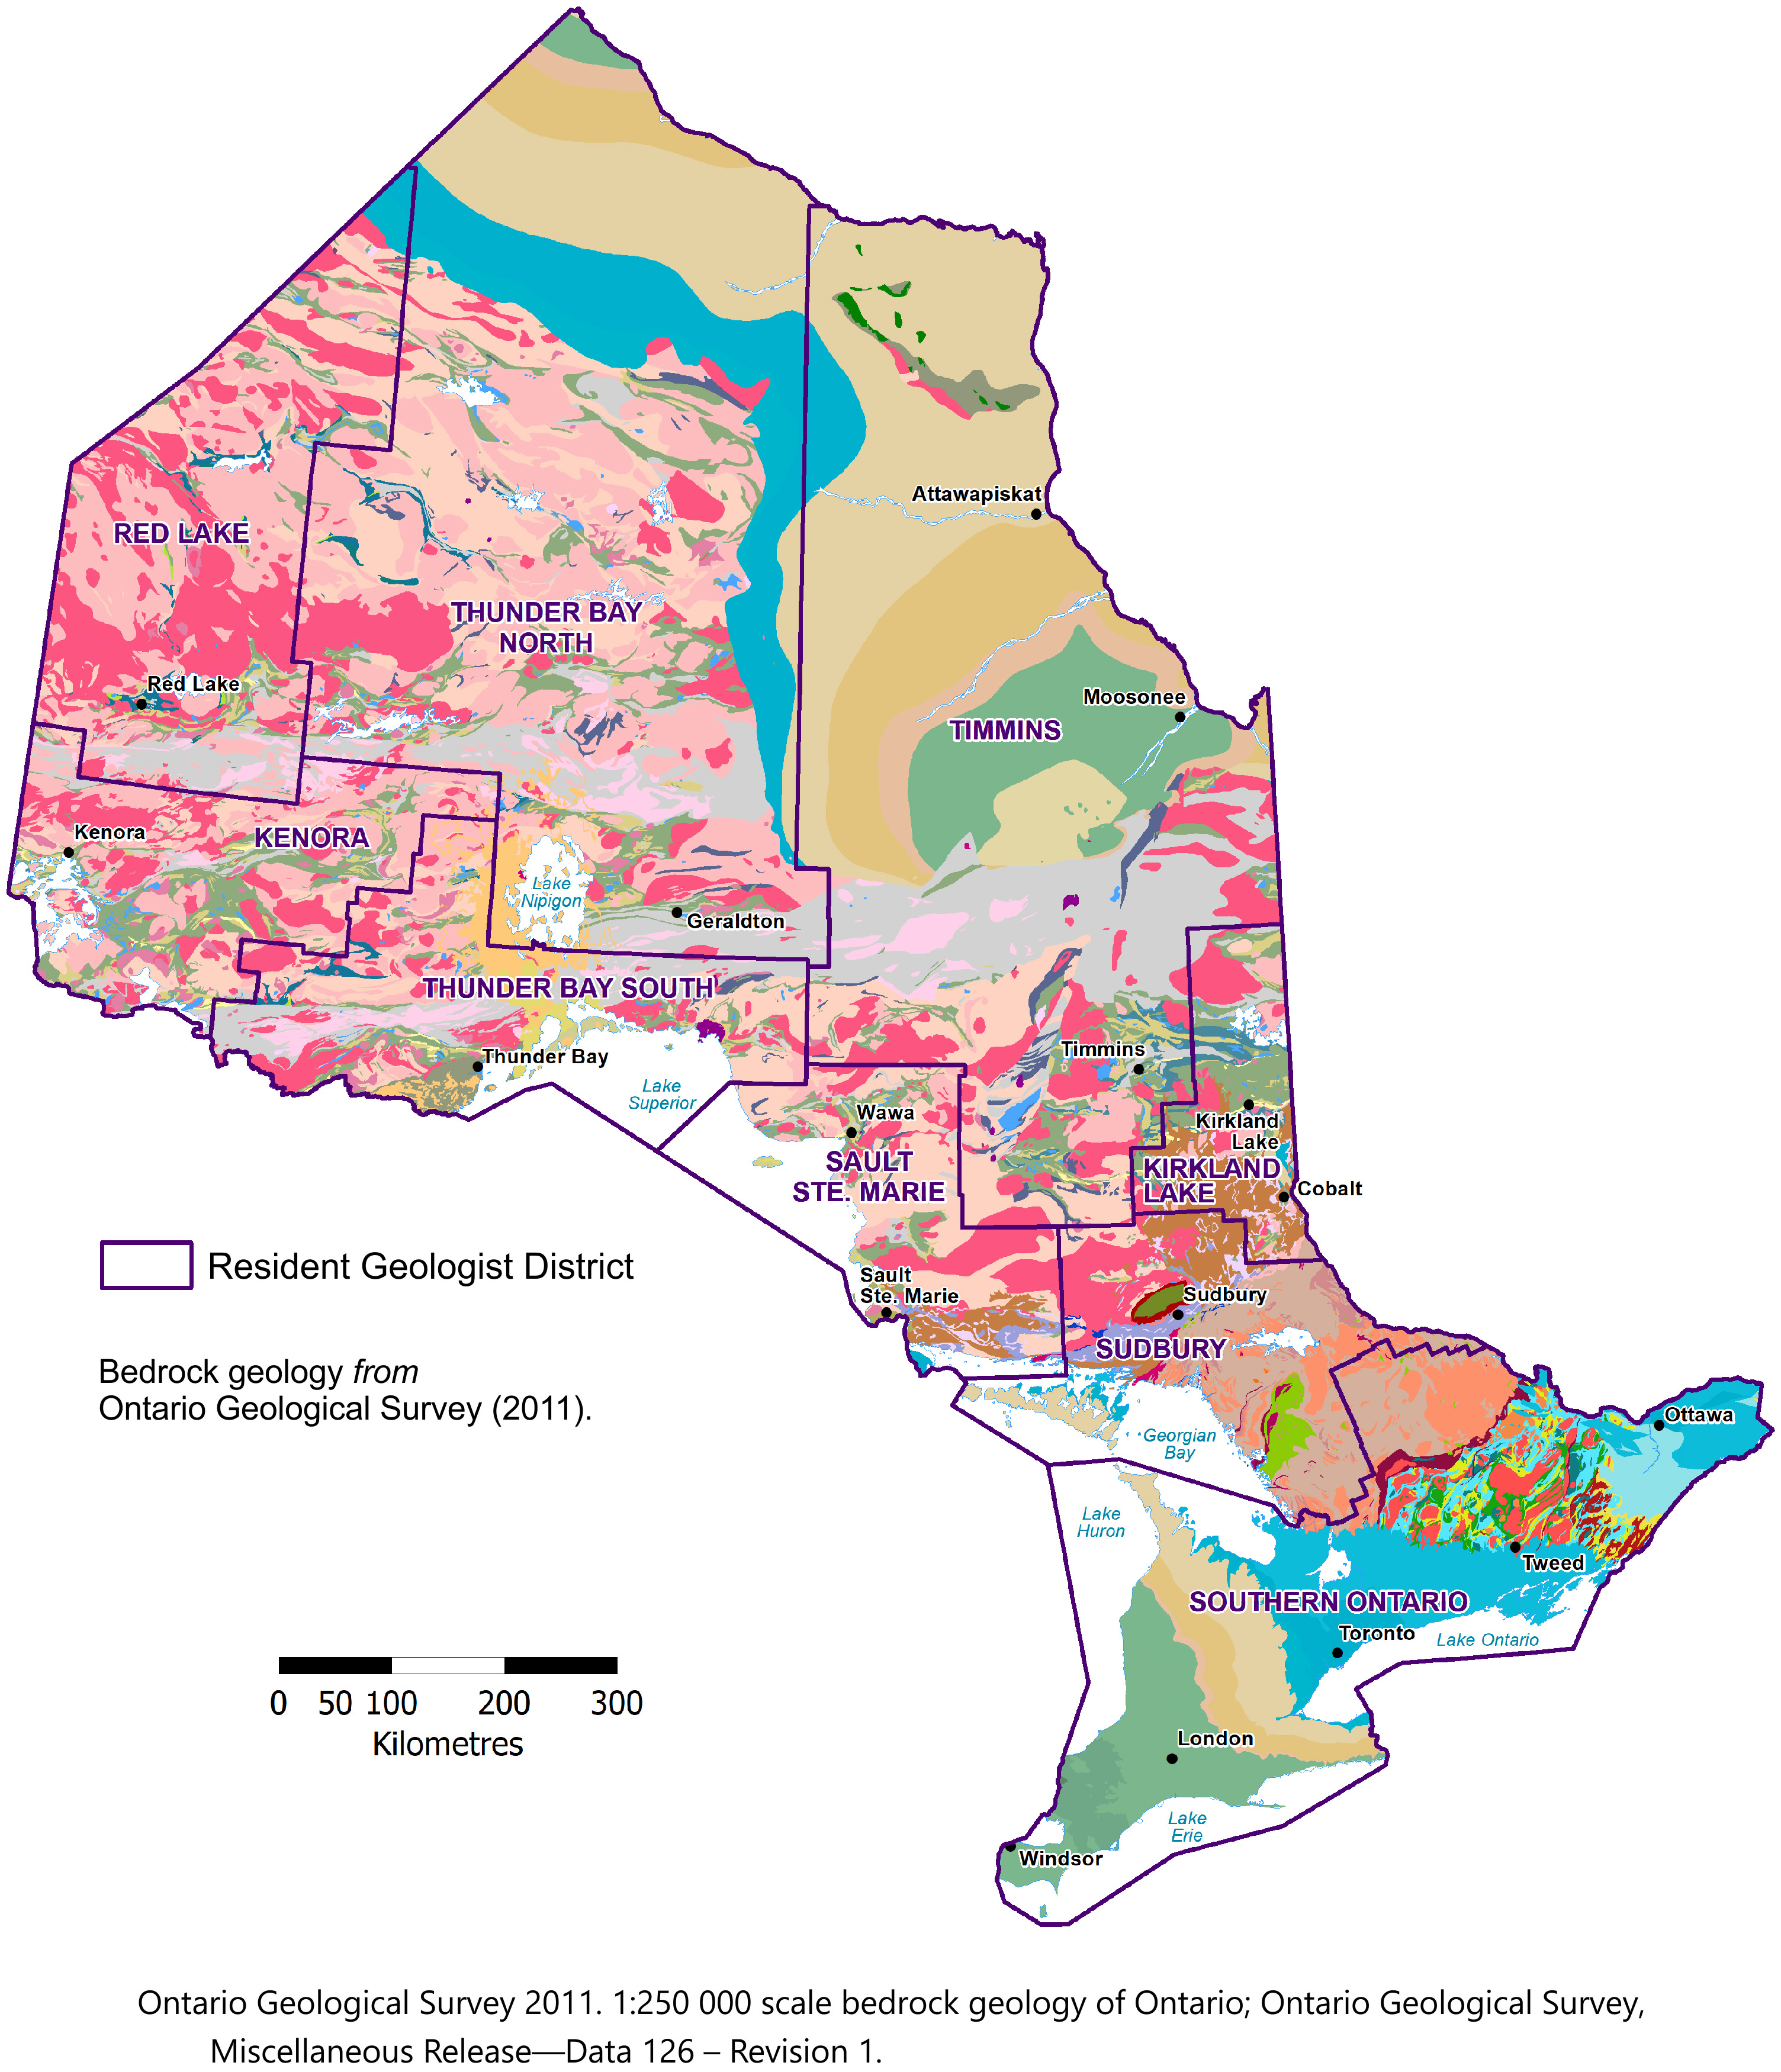 Bedrock geology from Ontario Geological Survey (2011)